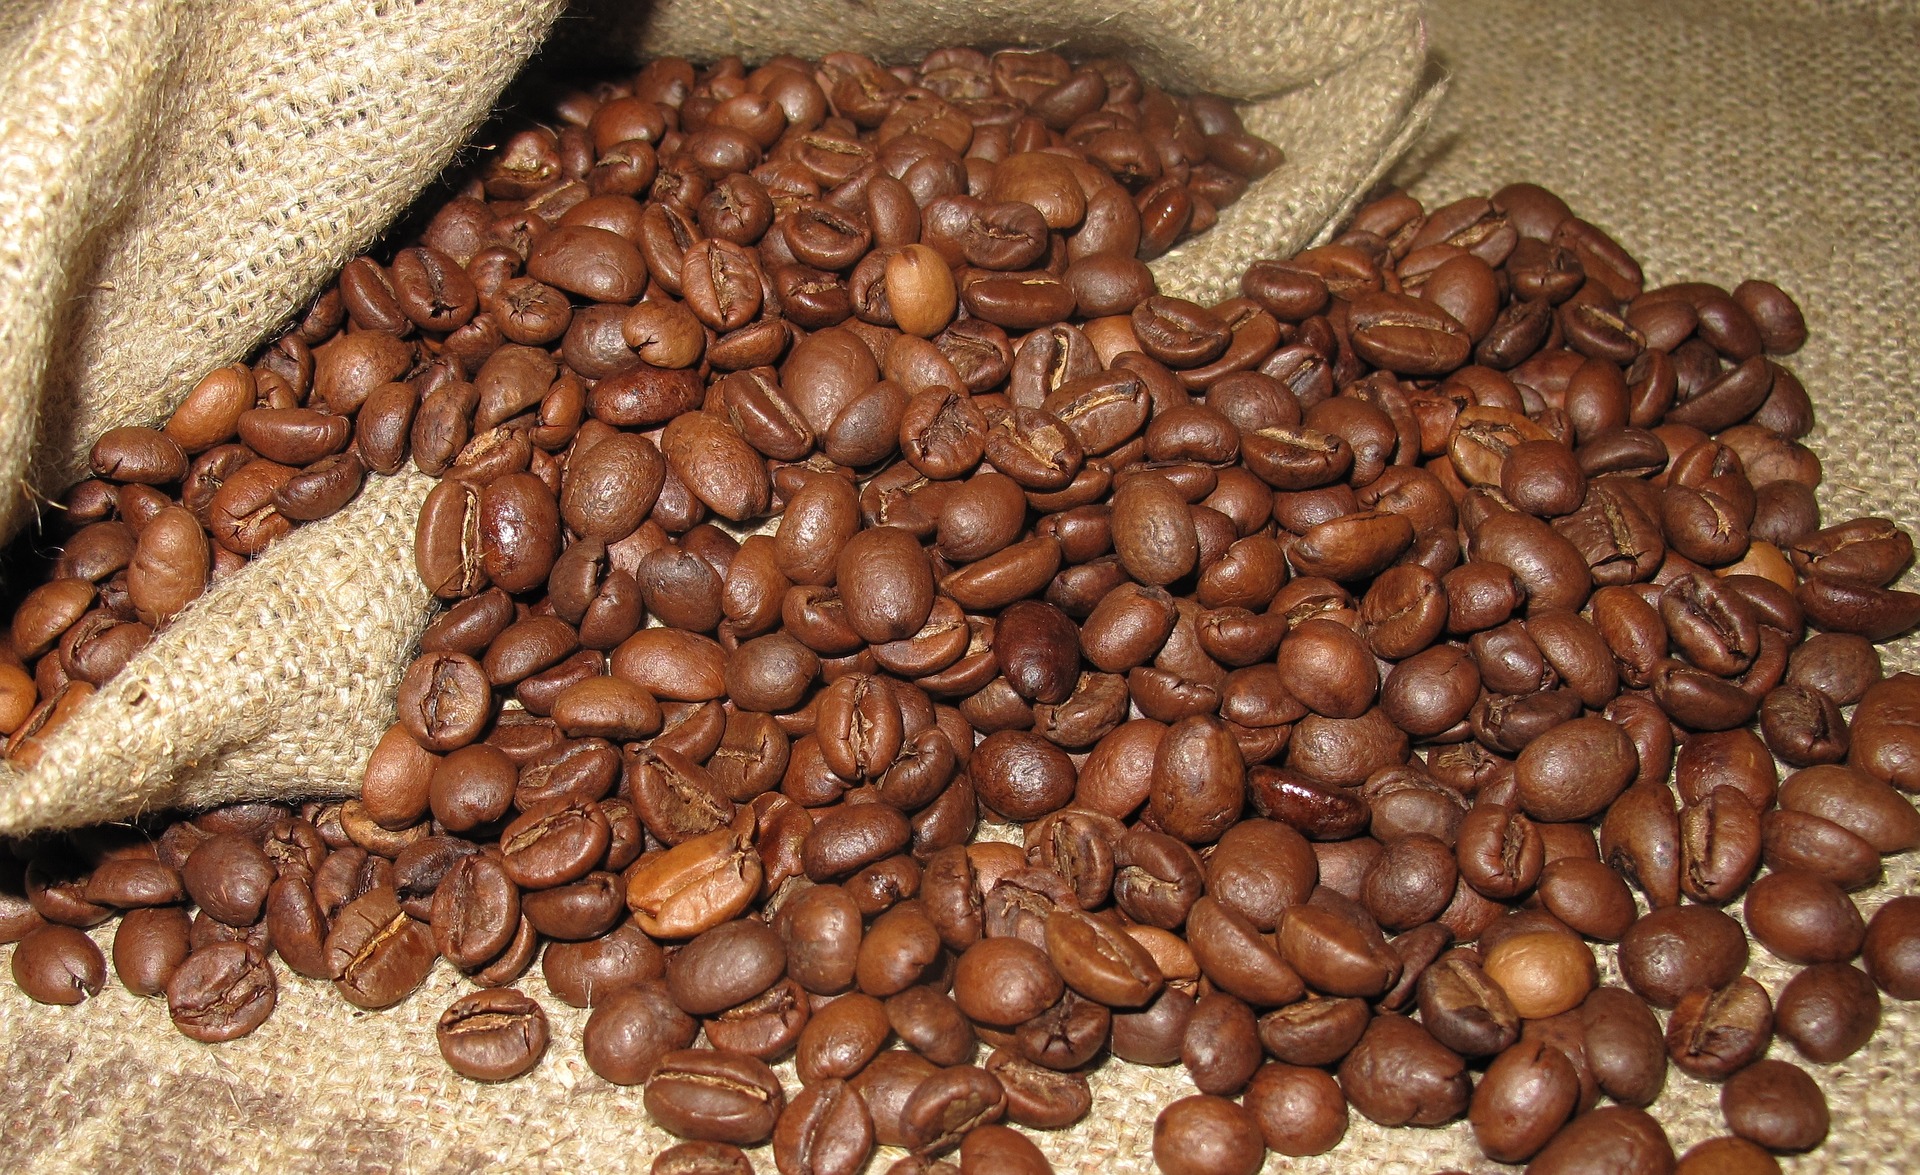 Few pounds of Arabica coffee